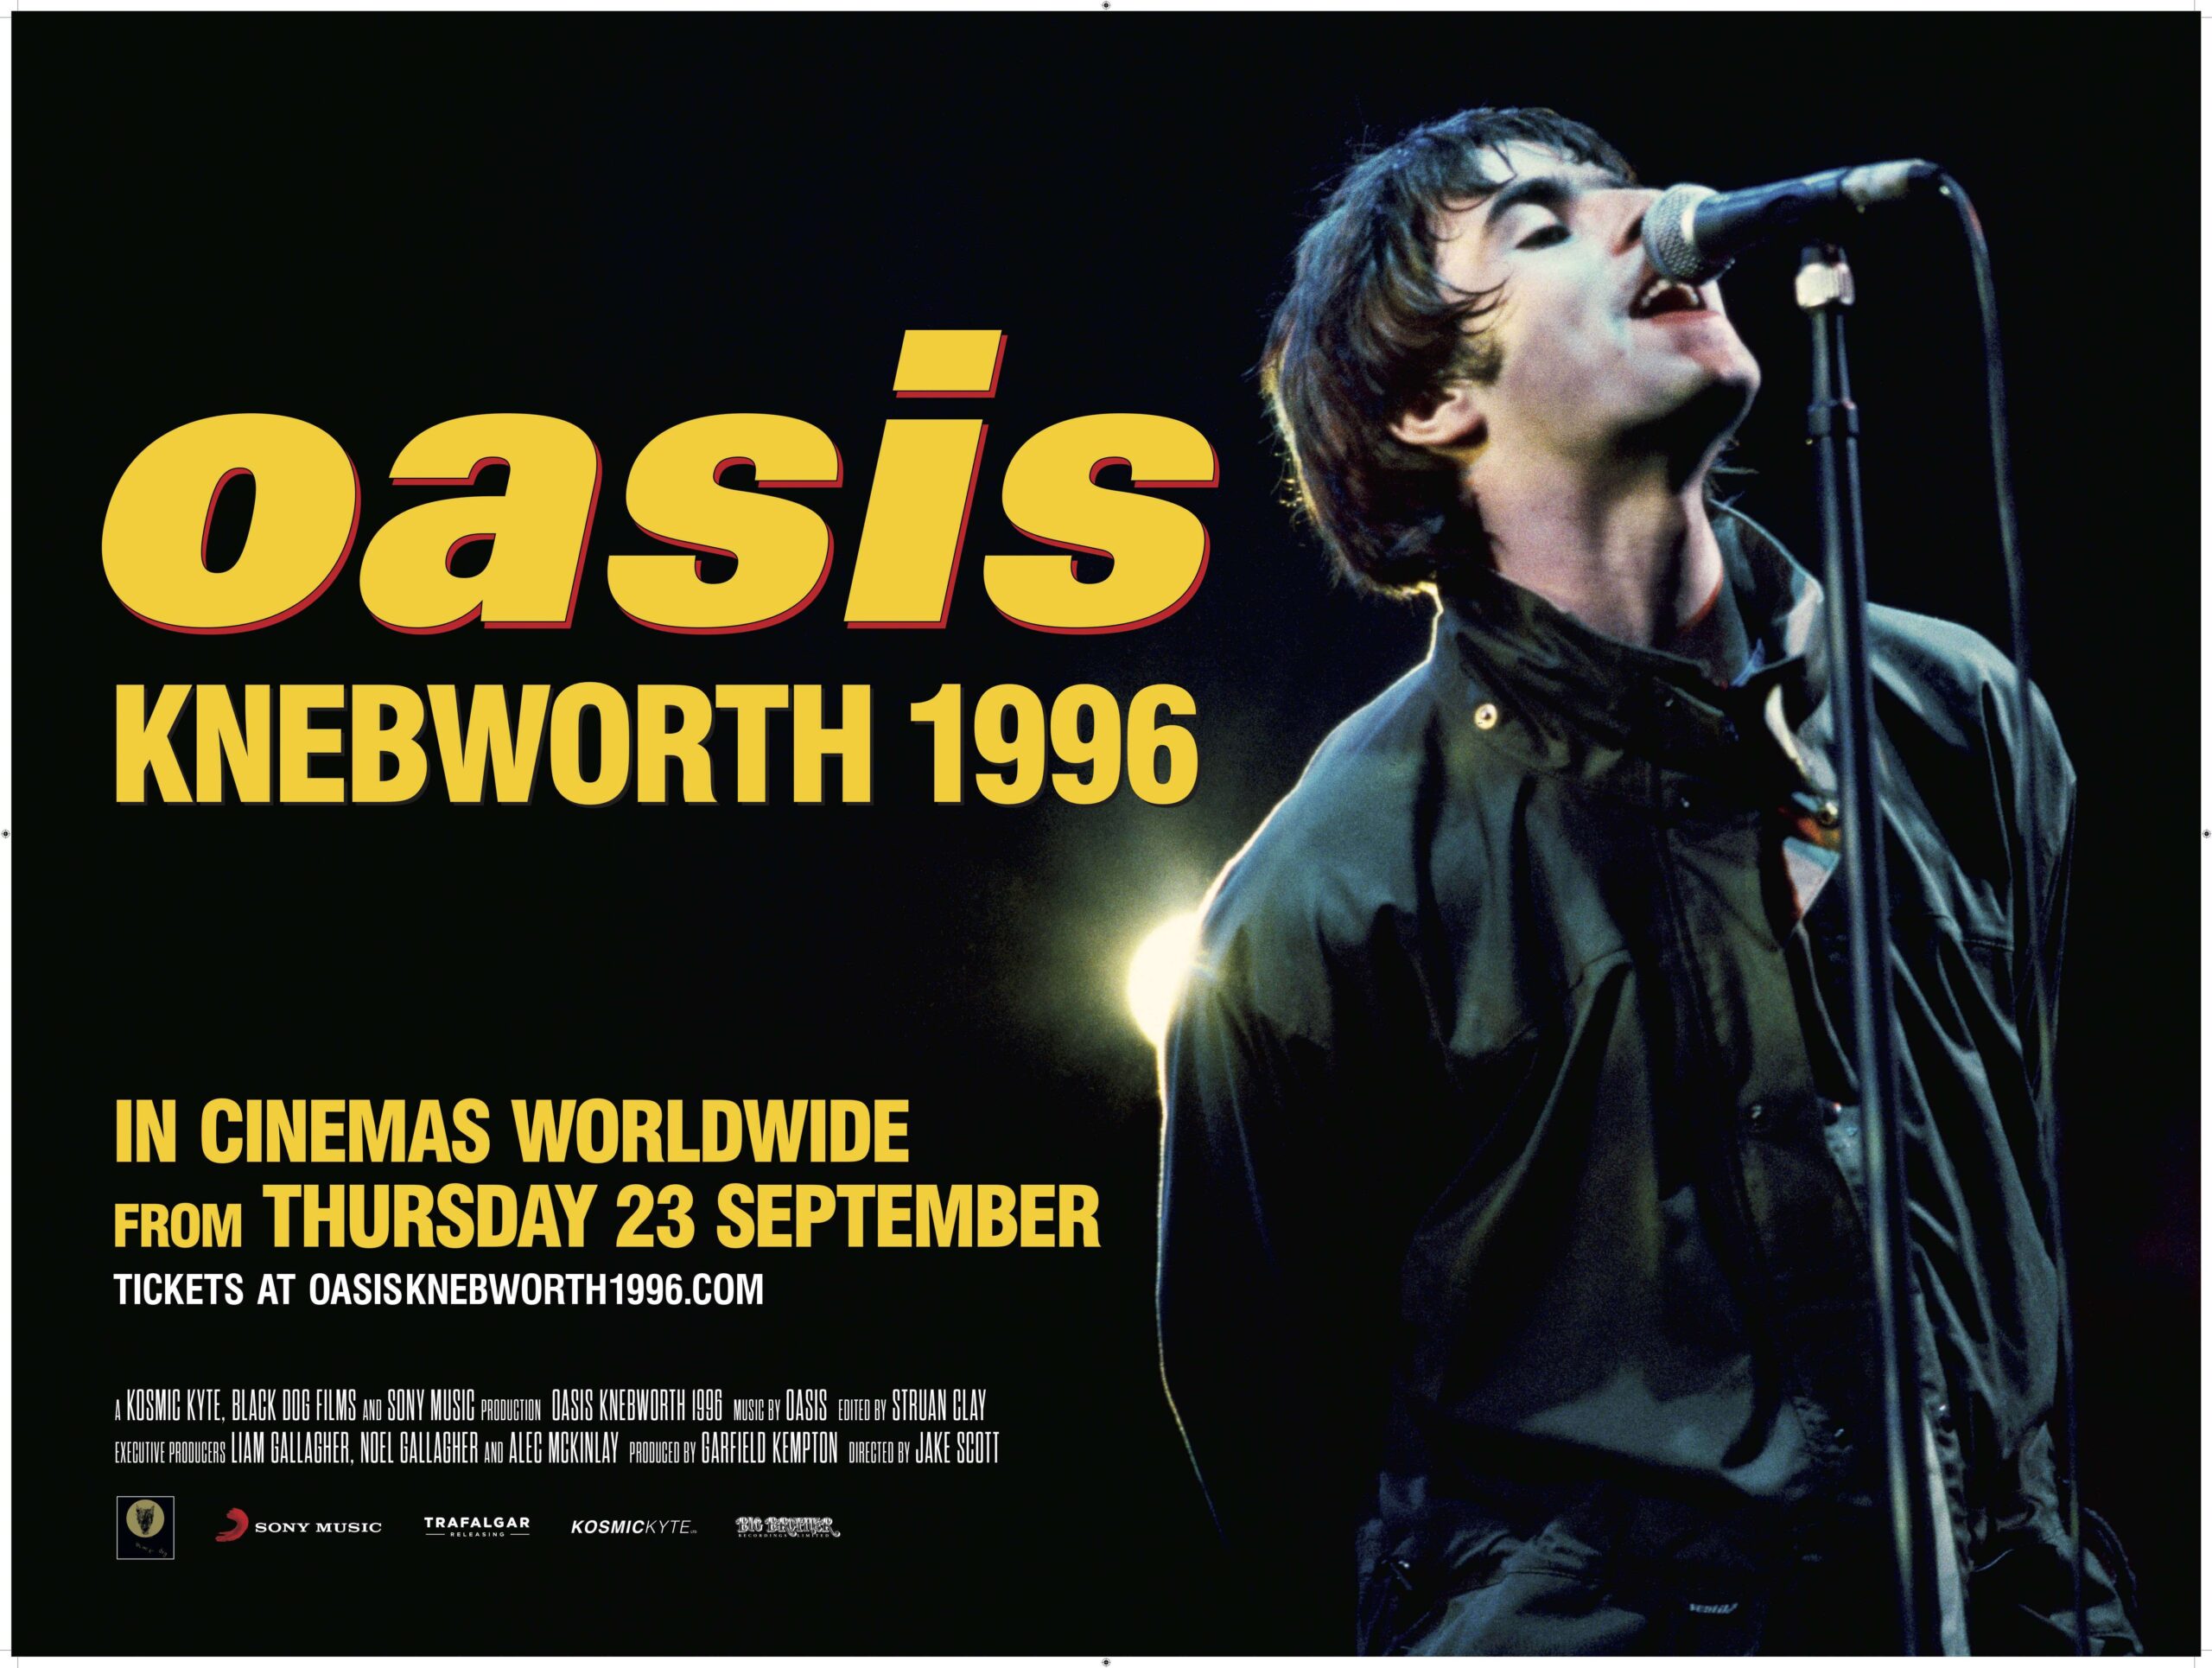 OASIS KNEBWORTH 1996 TRAILER UNVEILED Oasis Knebworth 1996 | Live Album & DVD/Blu-Ray released 19 November